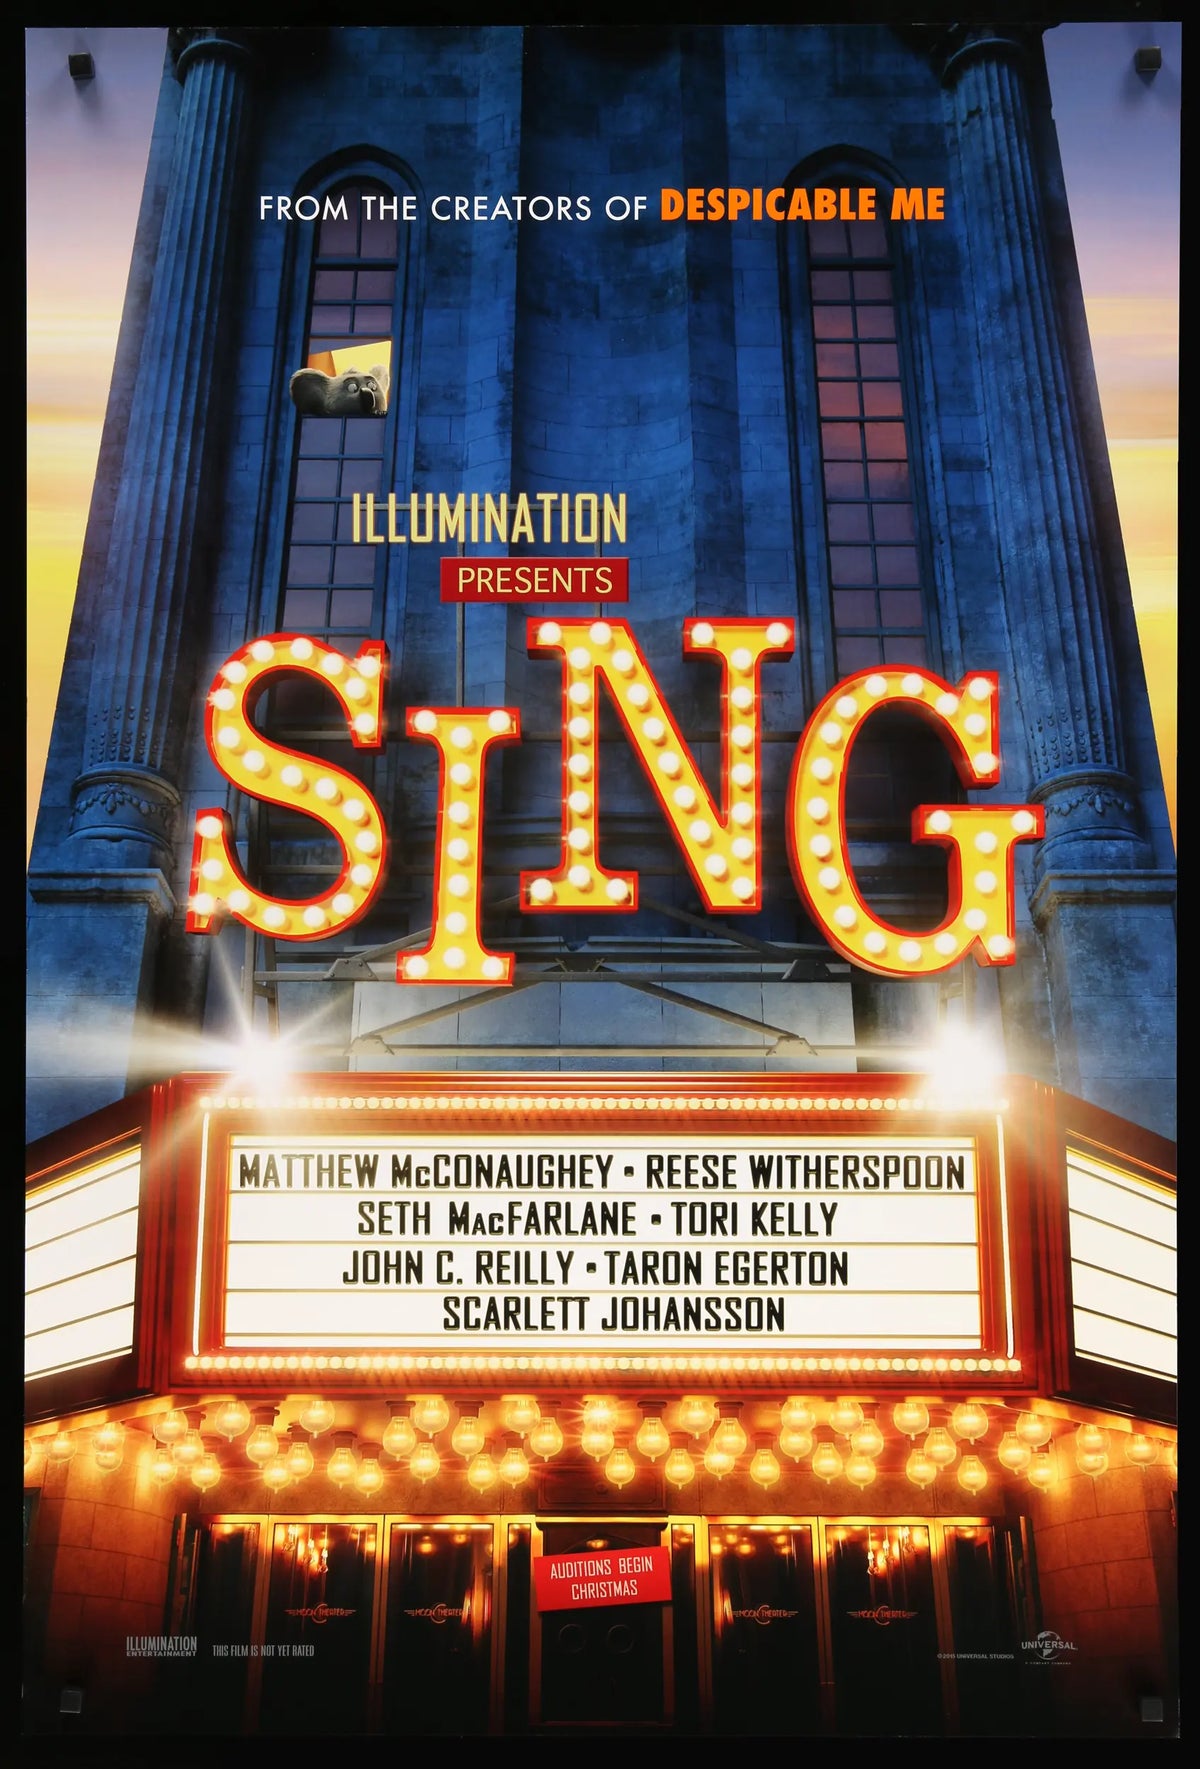 Sing (2016) original movie poster for sale at Original Film Art